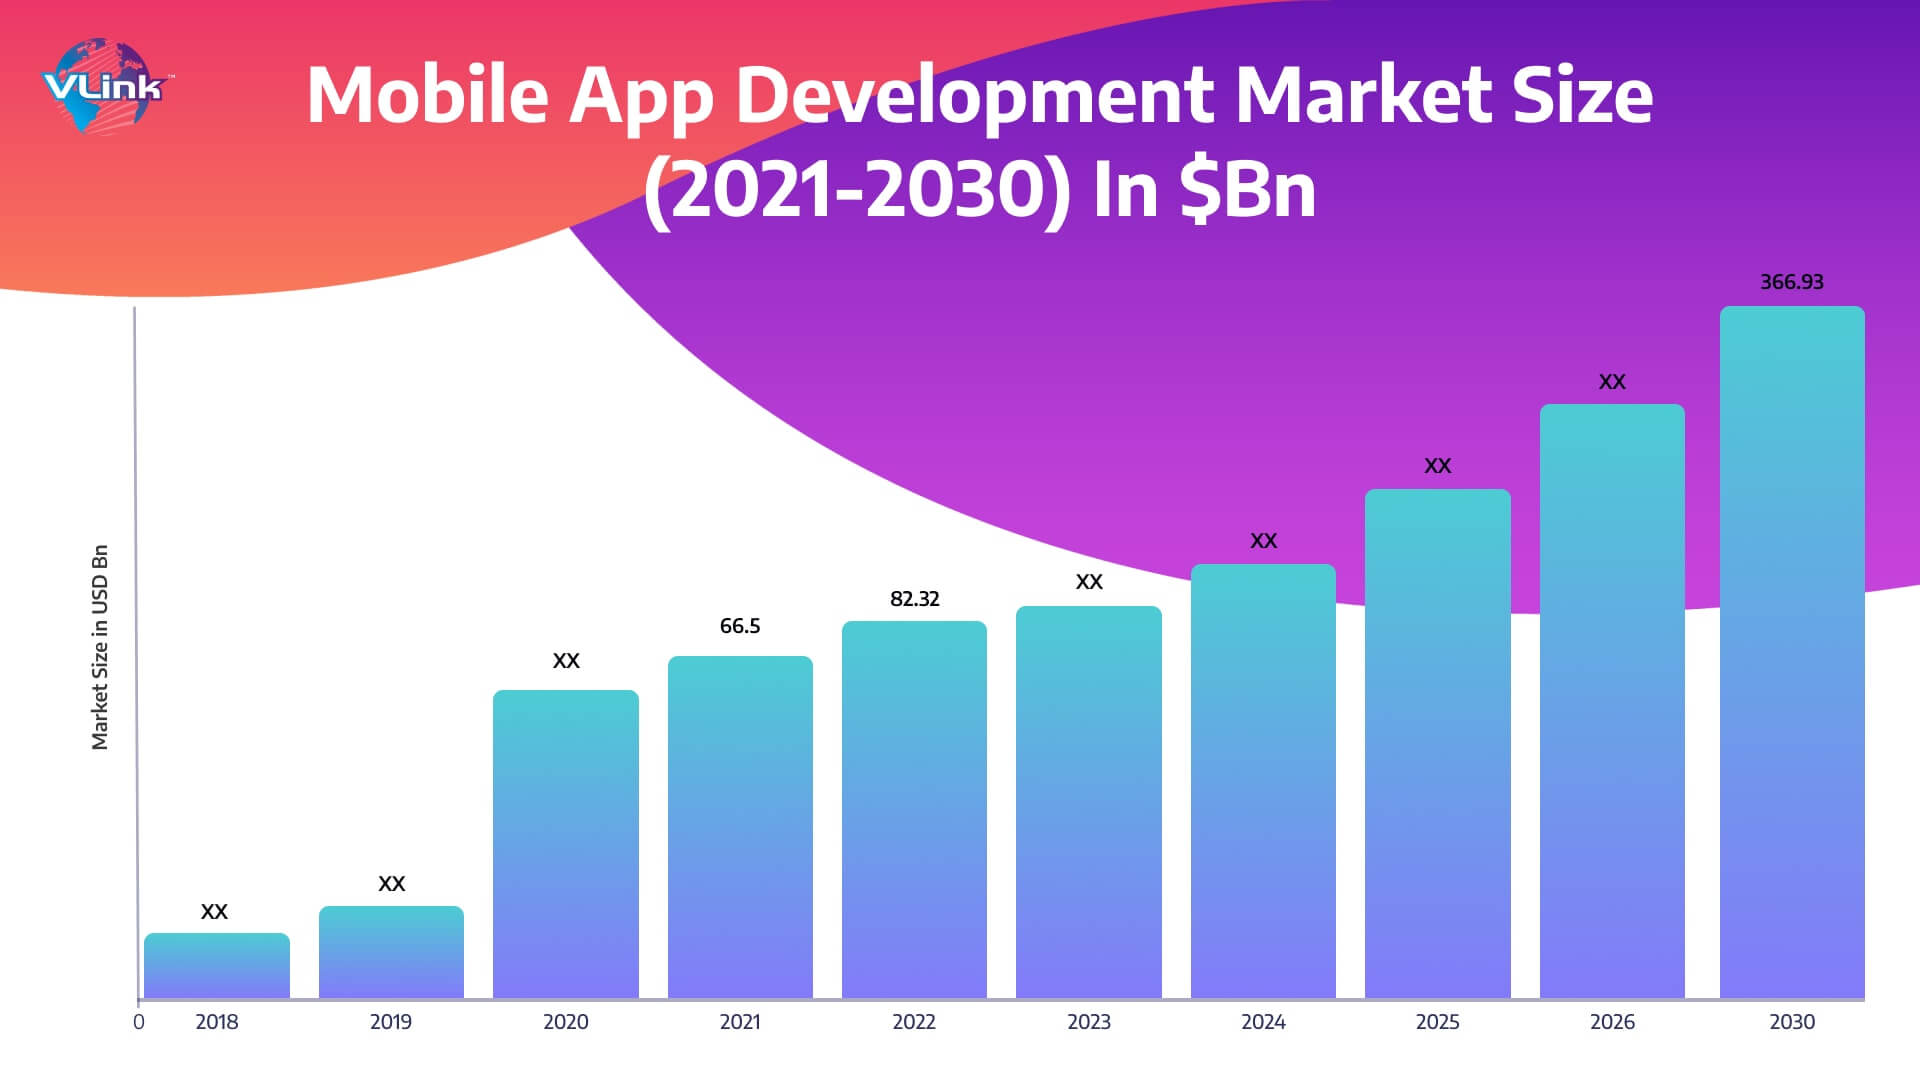 Mobile app development market size in Bn